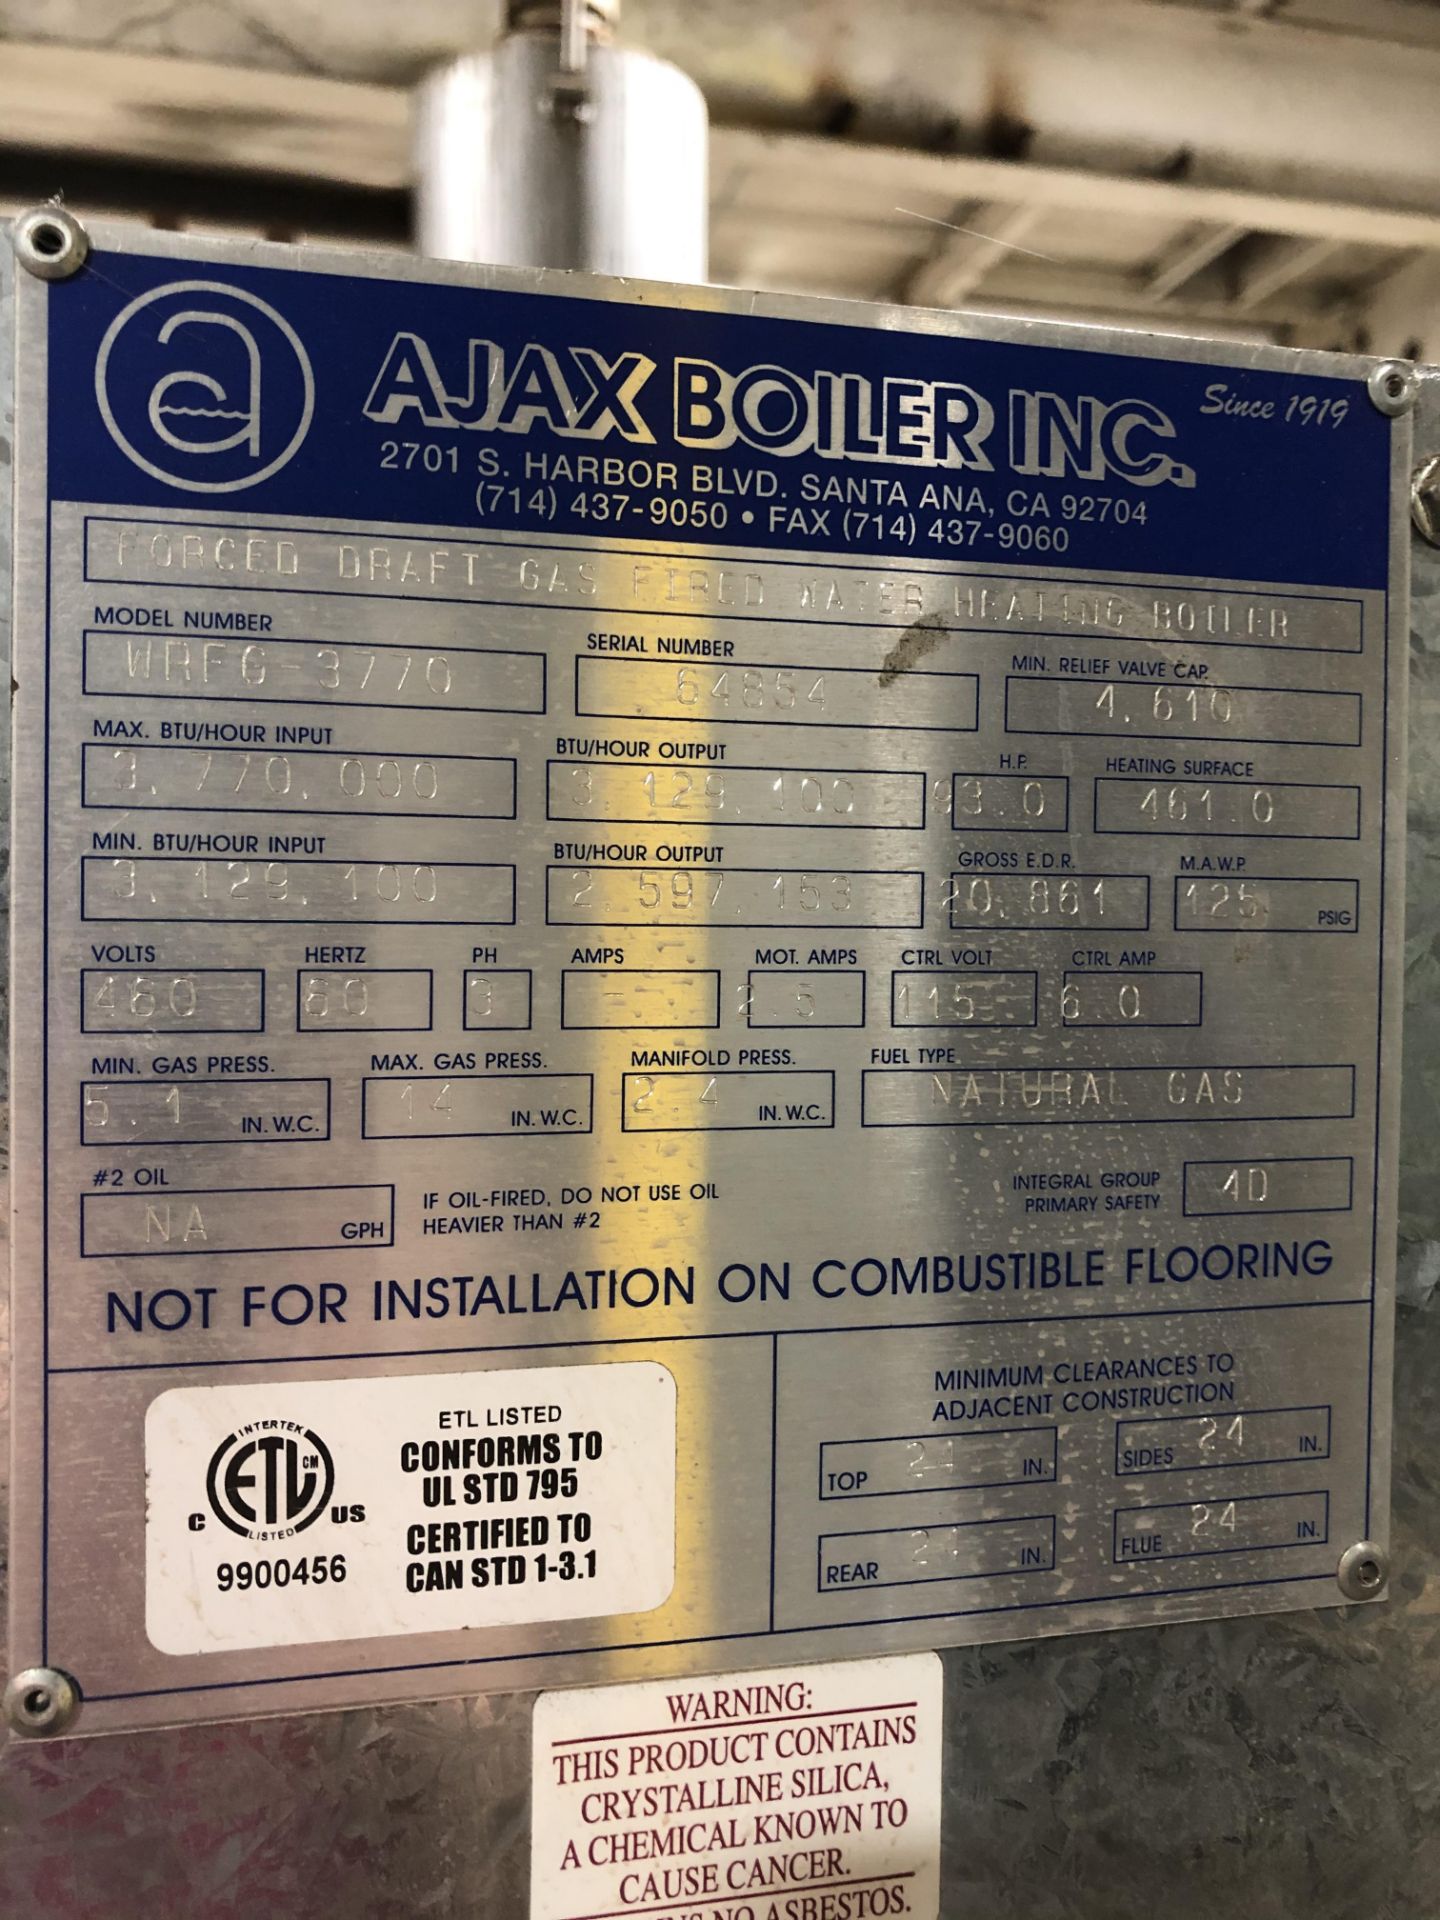 Ajax Boiler w/ Power Flame Burner, Forced Draft Gas Fired Water Heating Boiler, Model# WRFG-3770, - Image 5 of 7